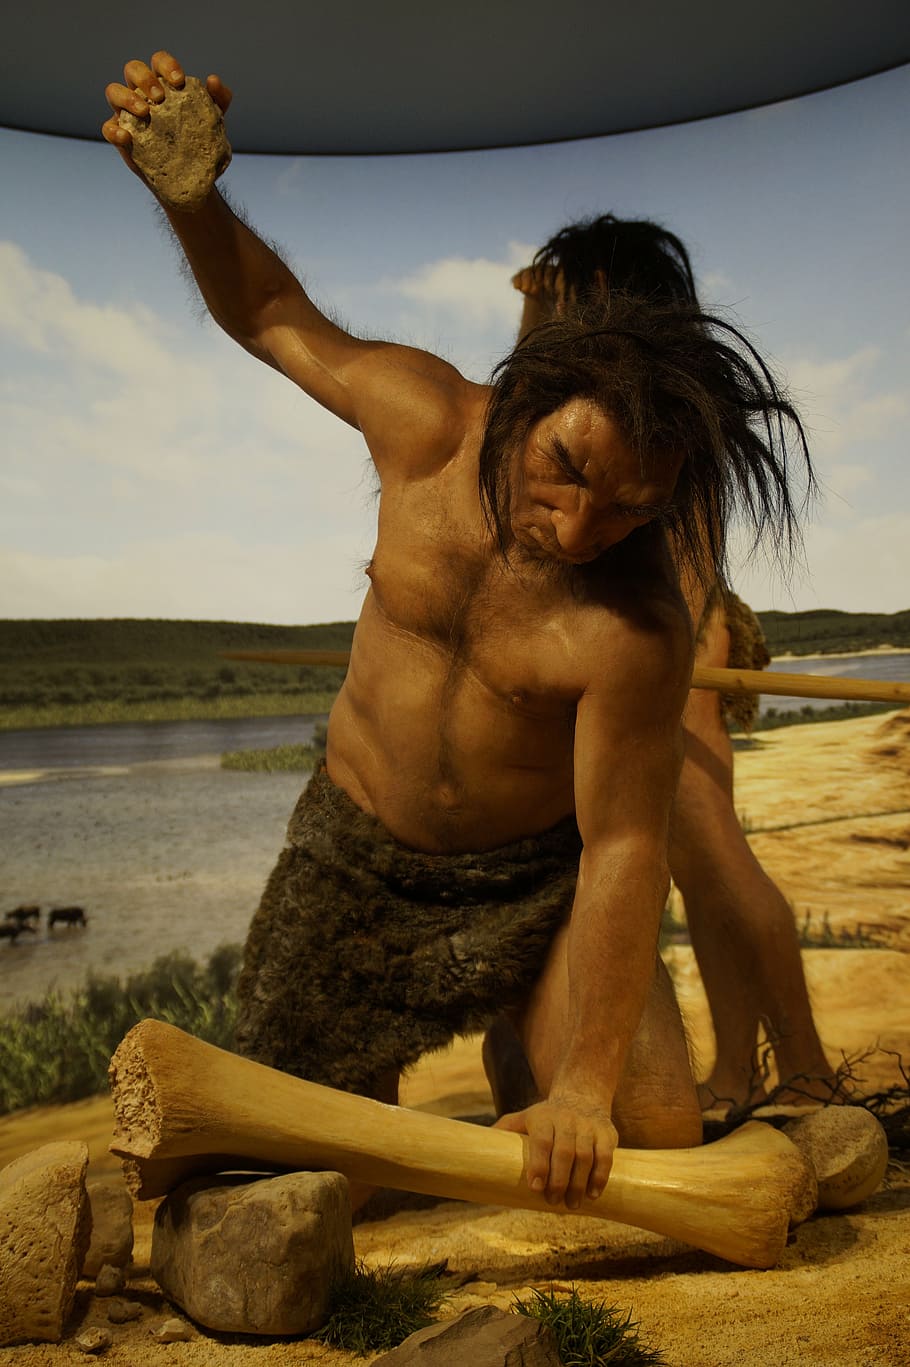 ancestor, stone age, caveman, neanderthal, hunting, museum